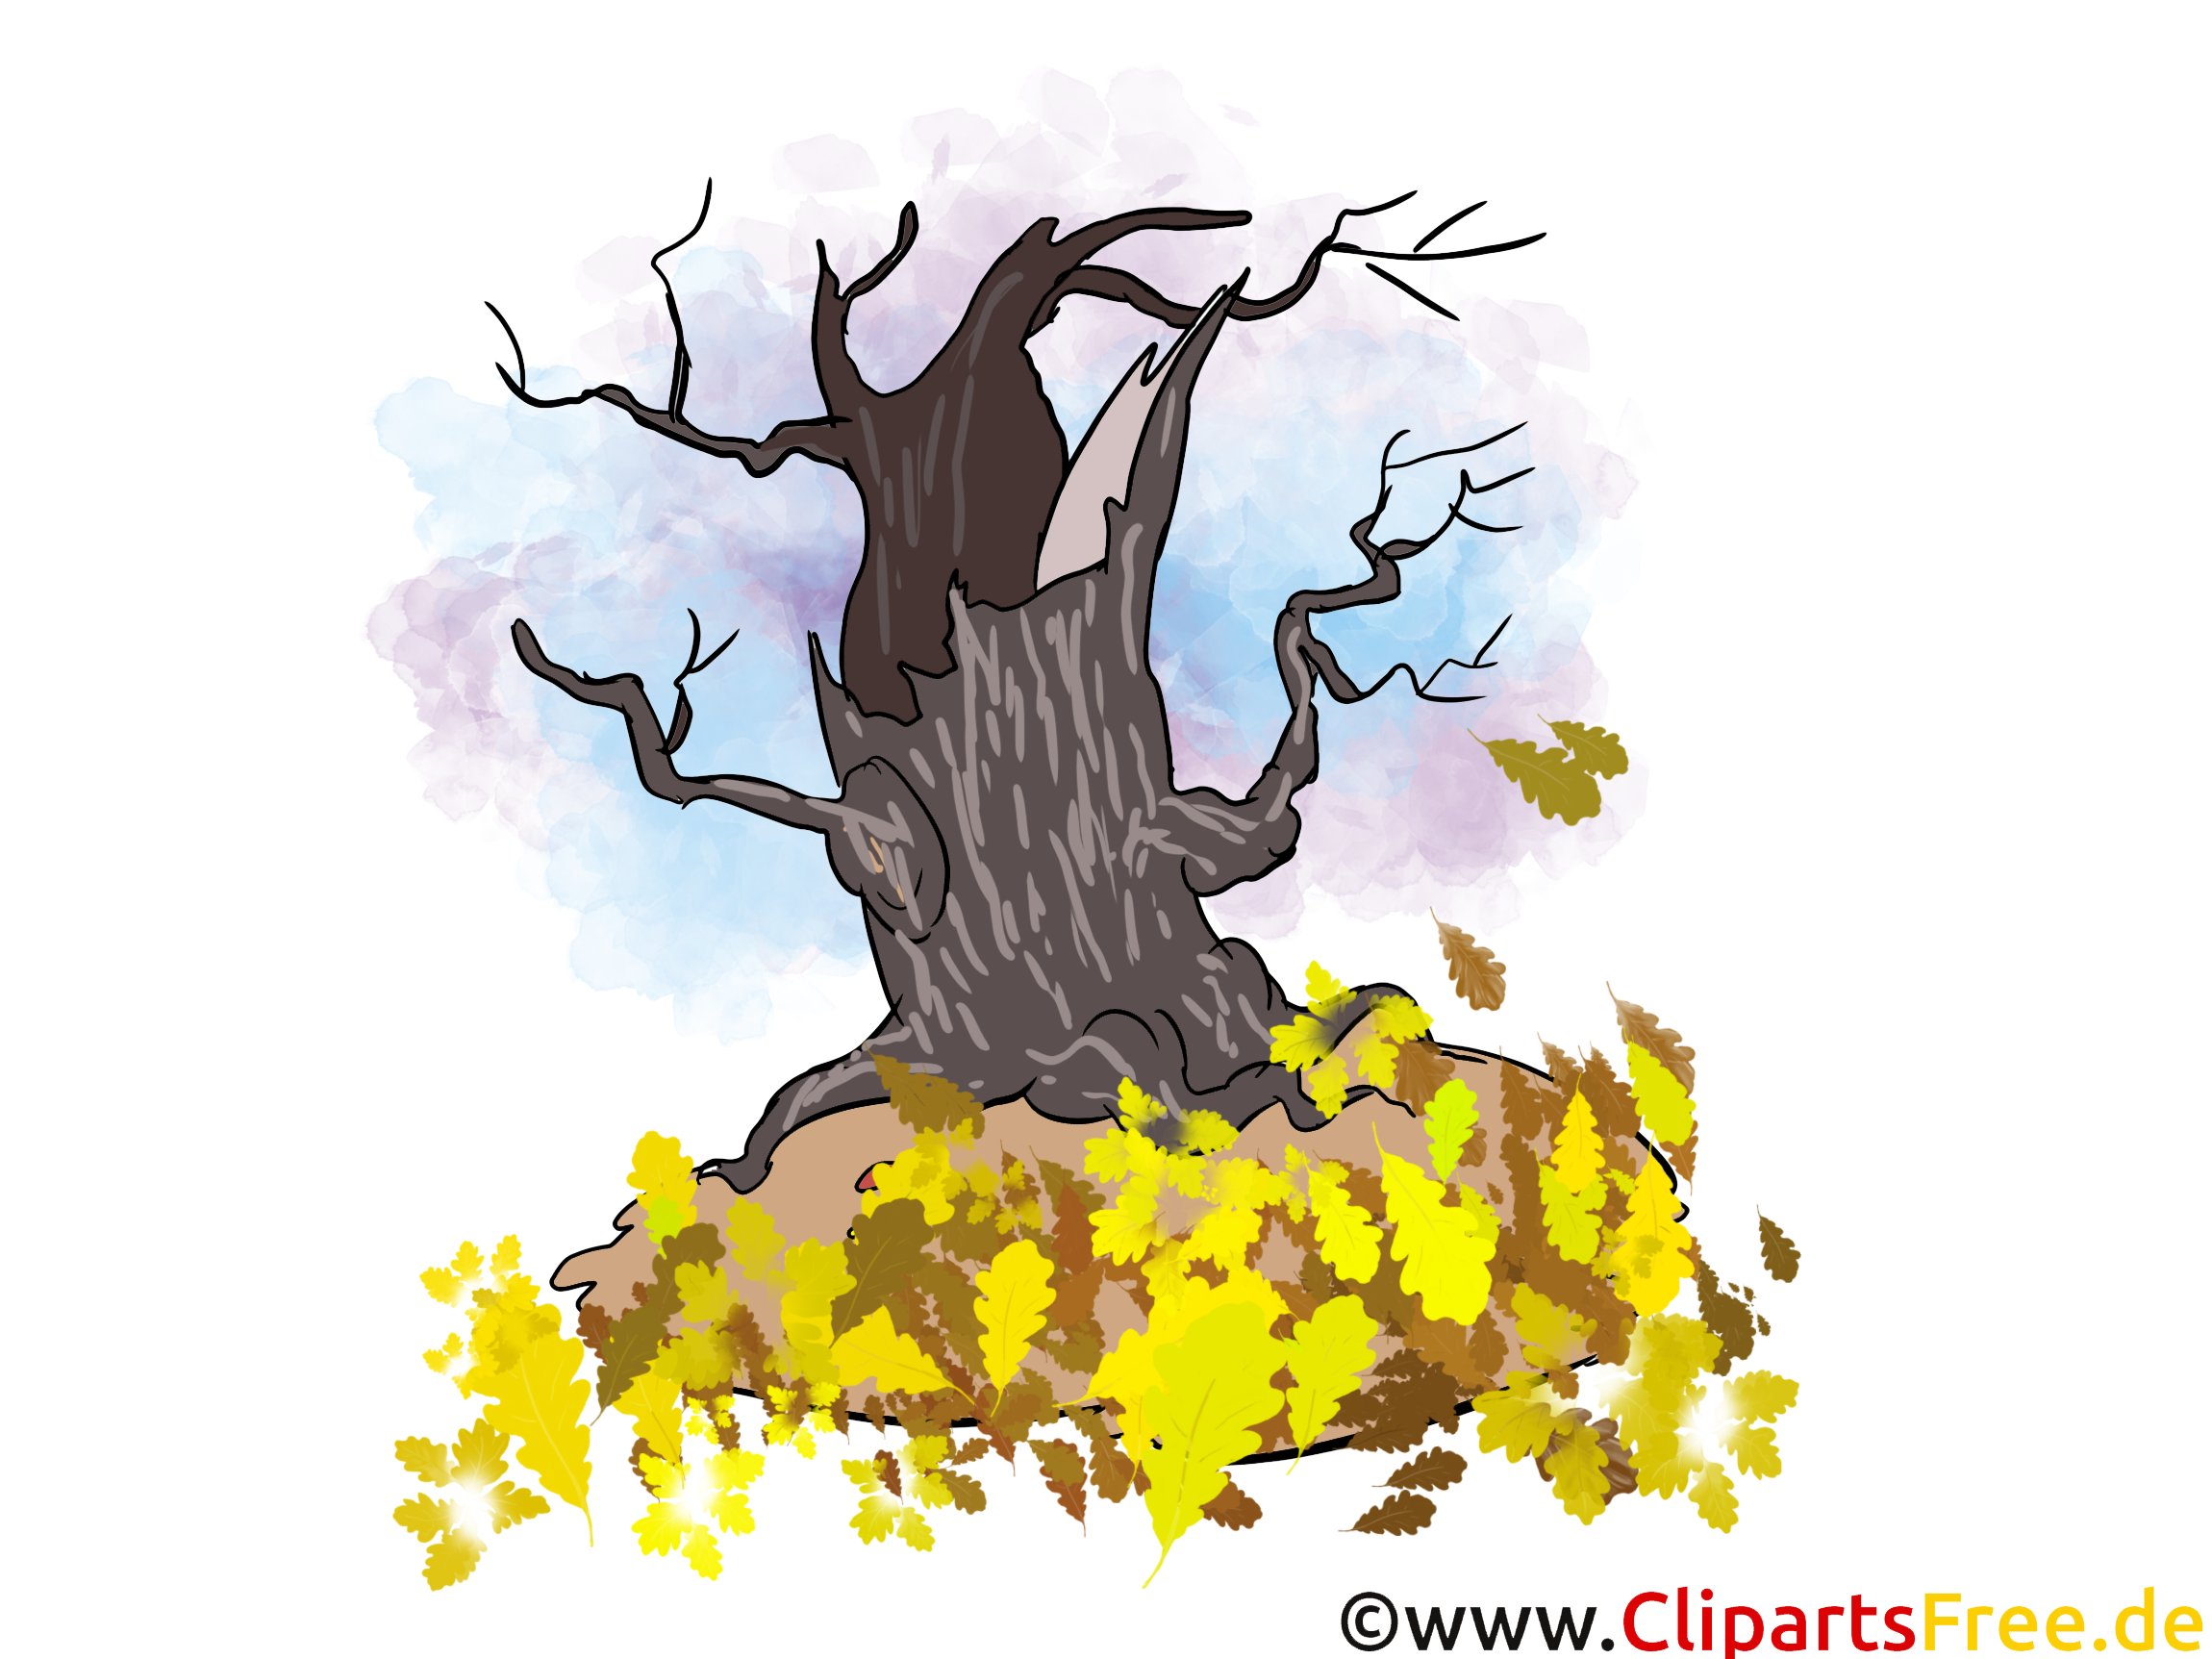 Sec arbre image gratuite – Automne illustration